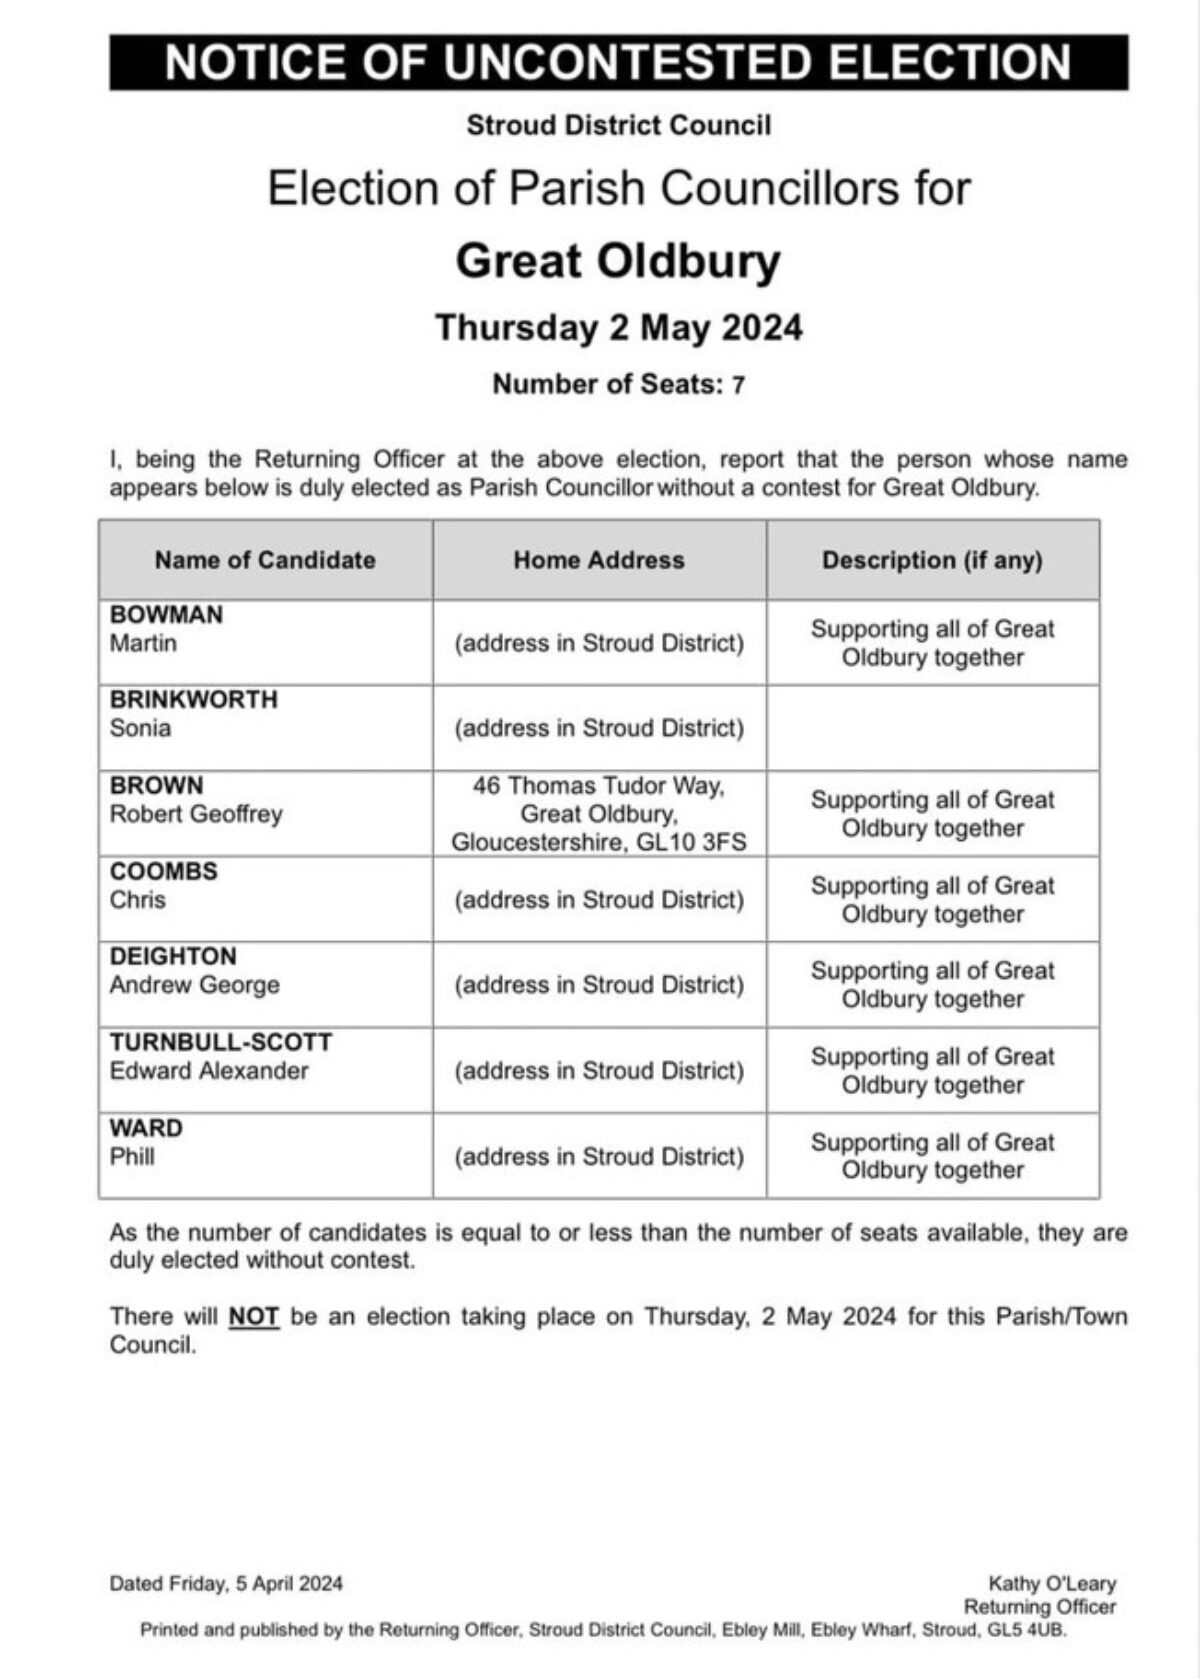 Great Oldbury Parish Council